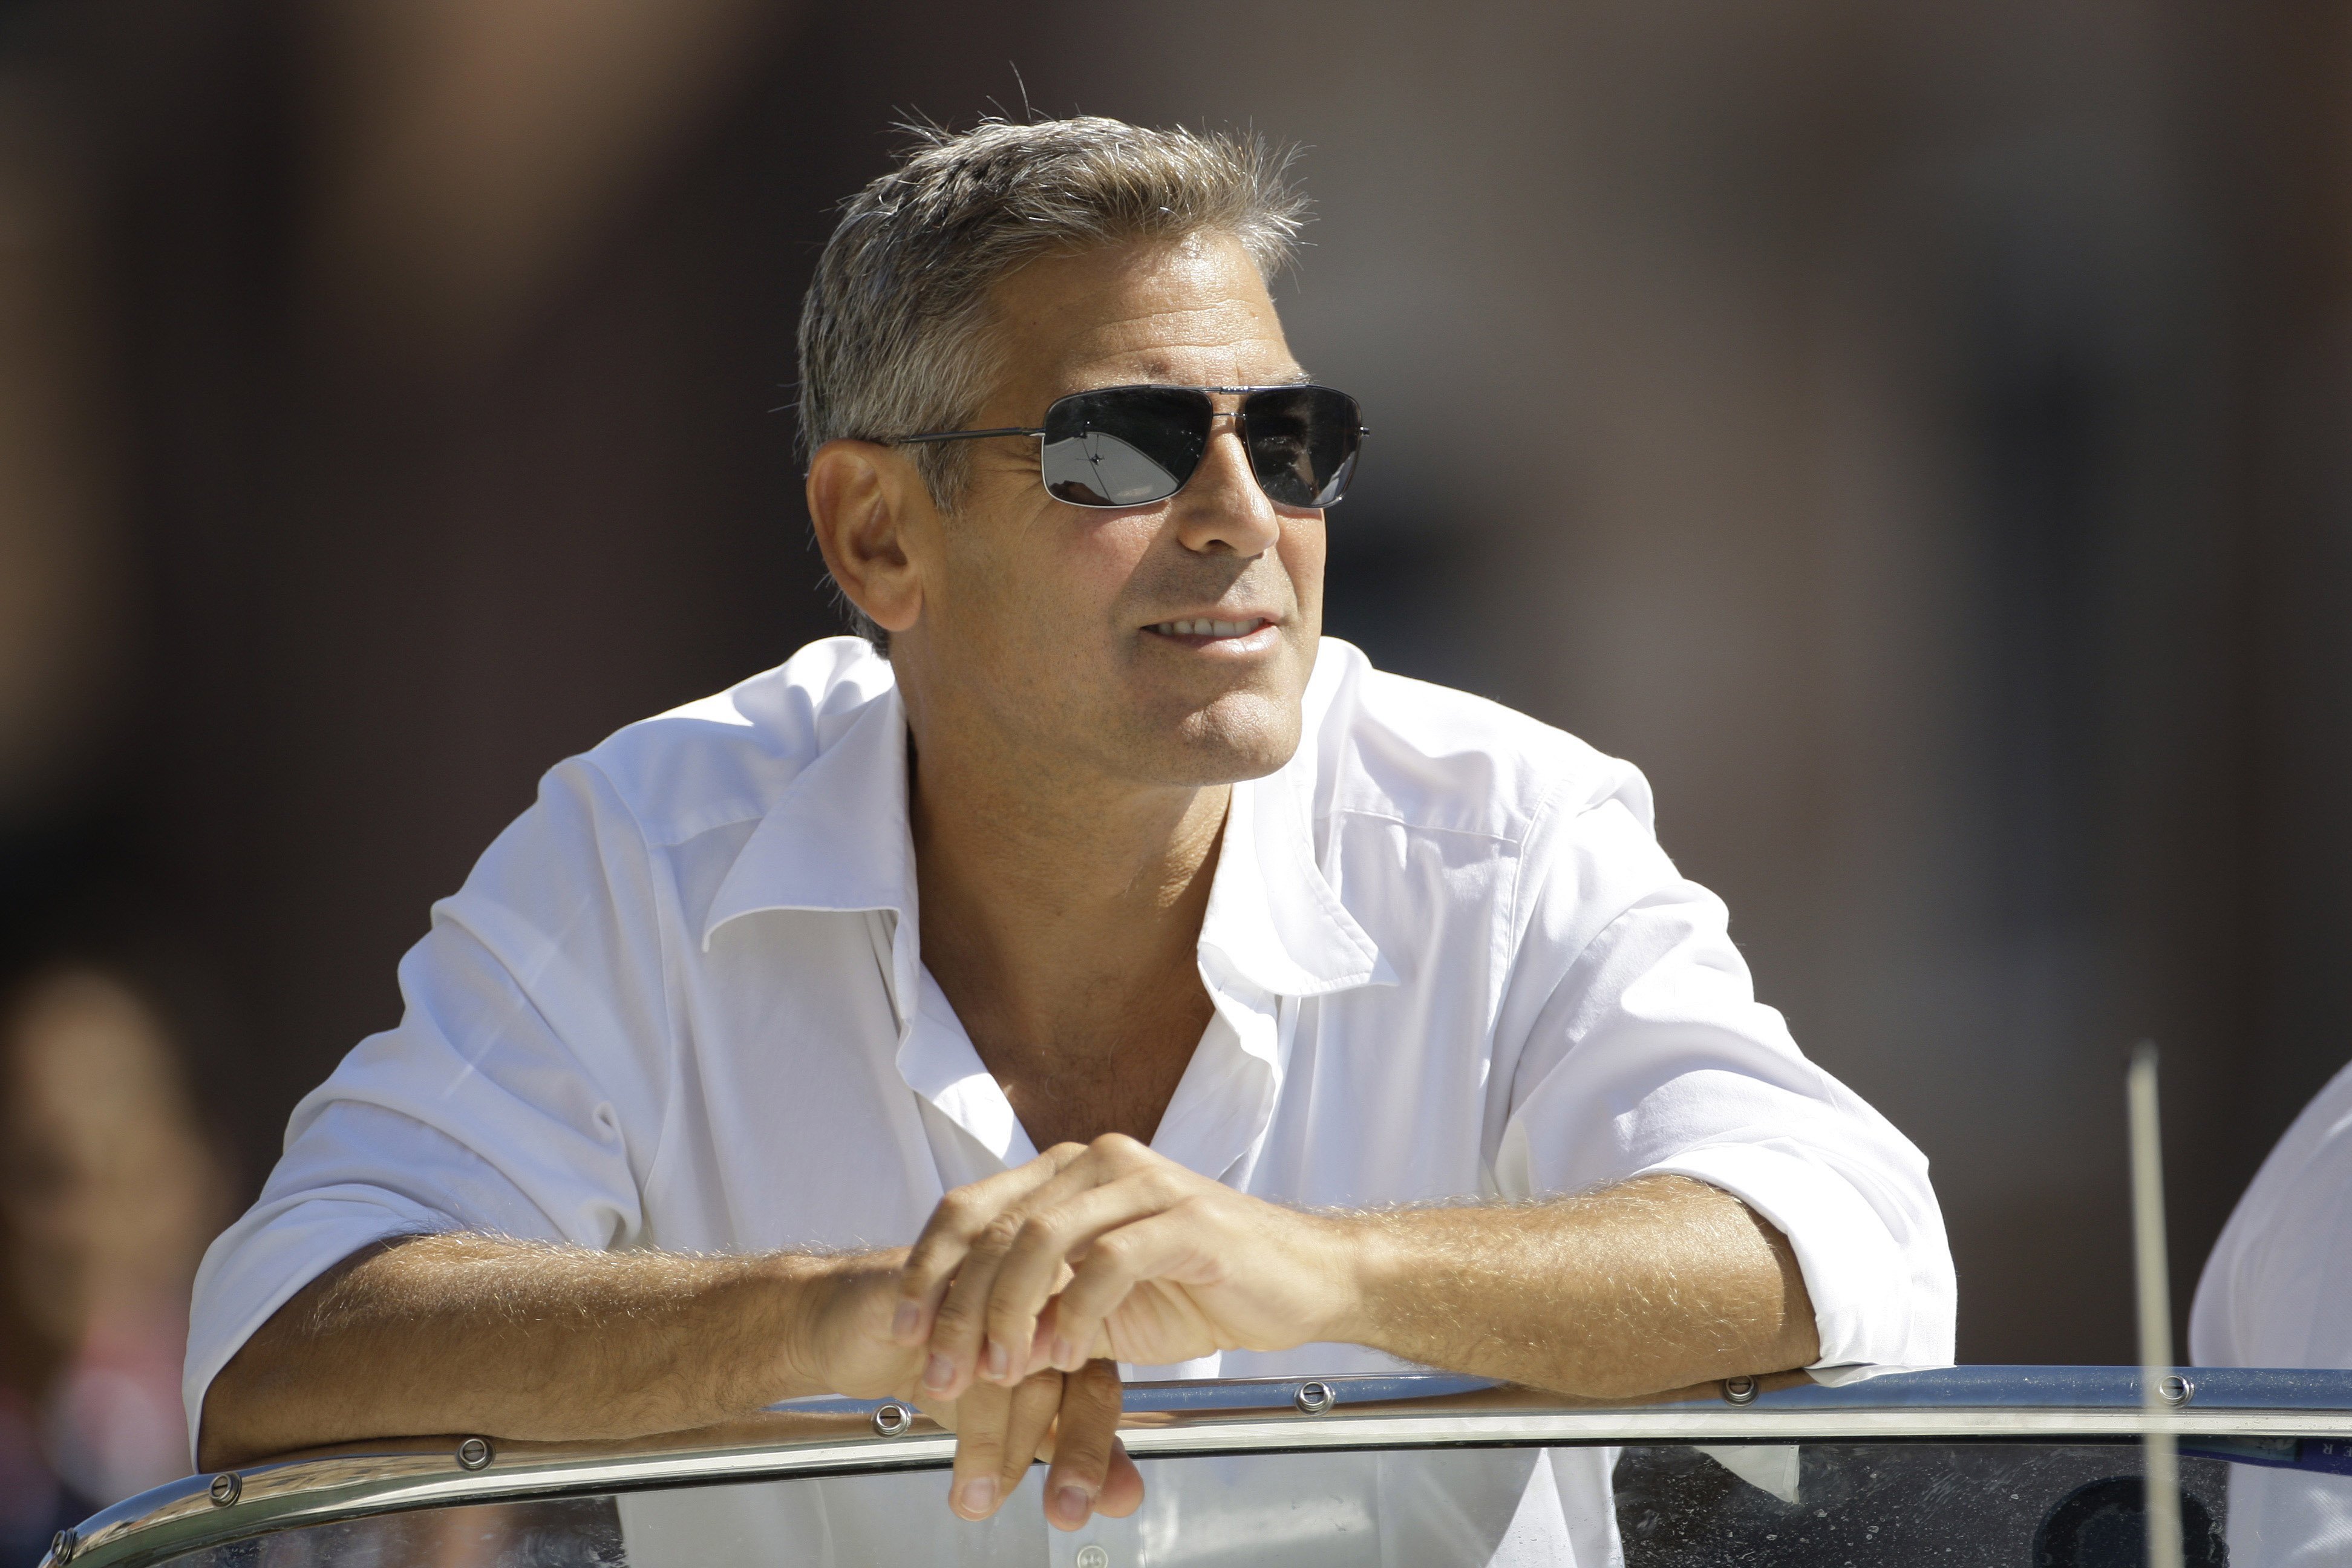 Форум мужчины после 50. Джордж Клуни фото. Джордж Клуни очки. Джордж Клуни в 50 лет. Джордж Клуни в 40 лет.